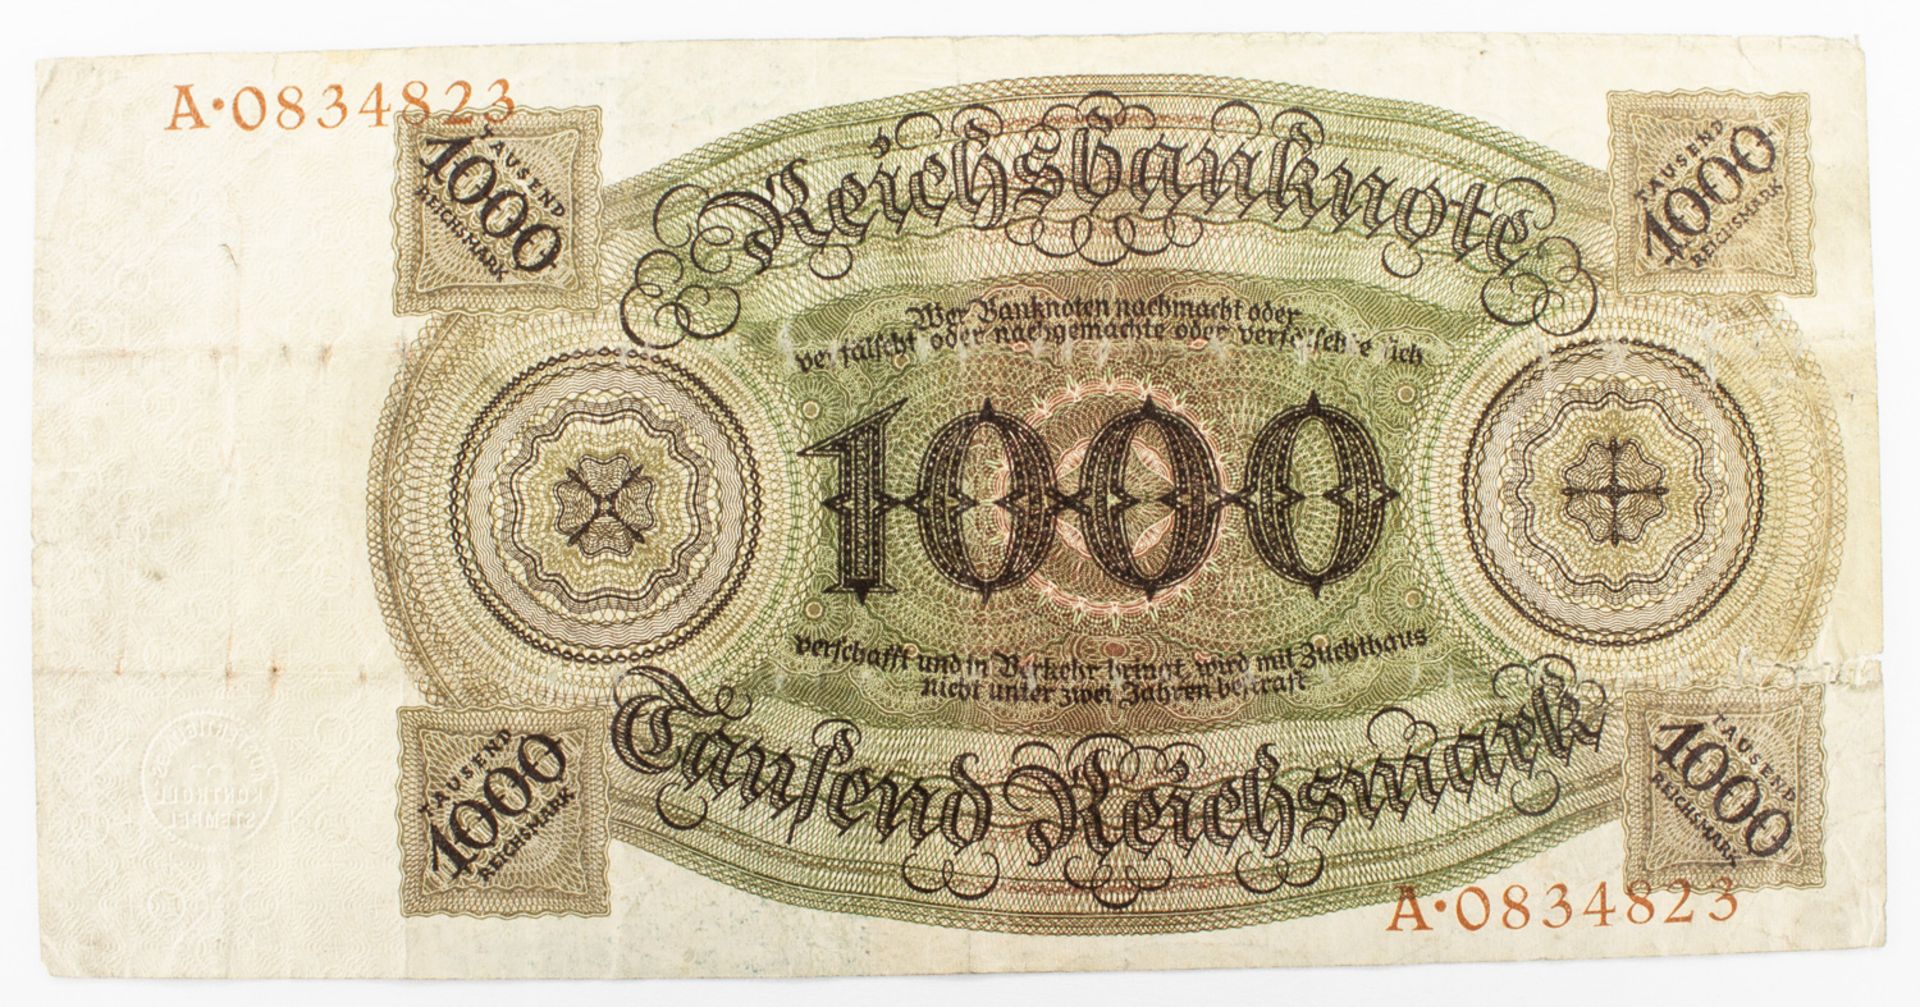 1000 Reichsmark - Image 2 of 2